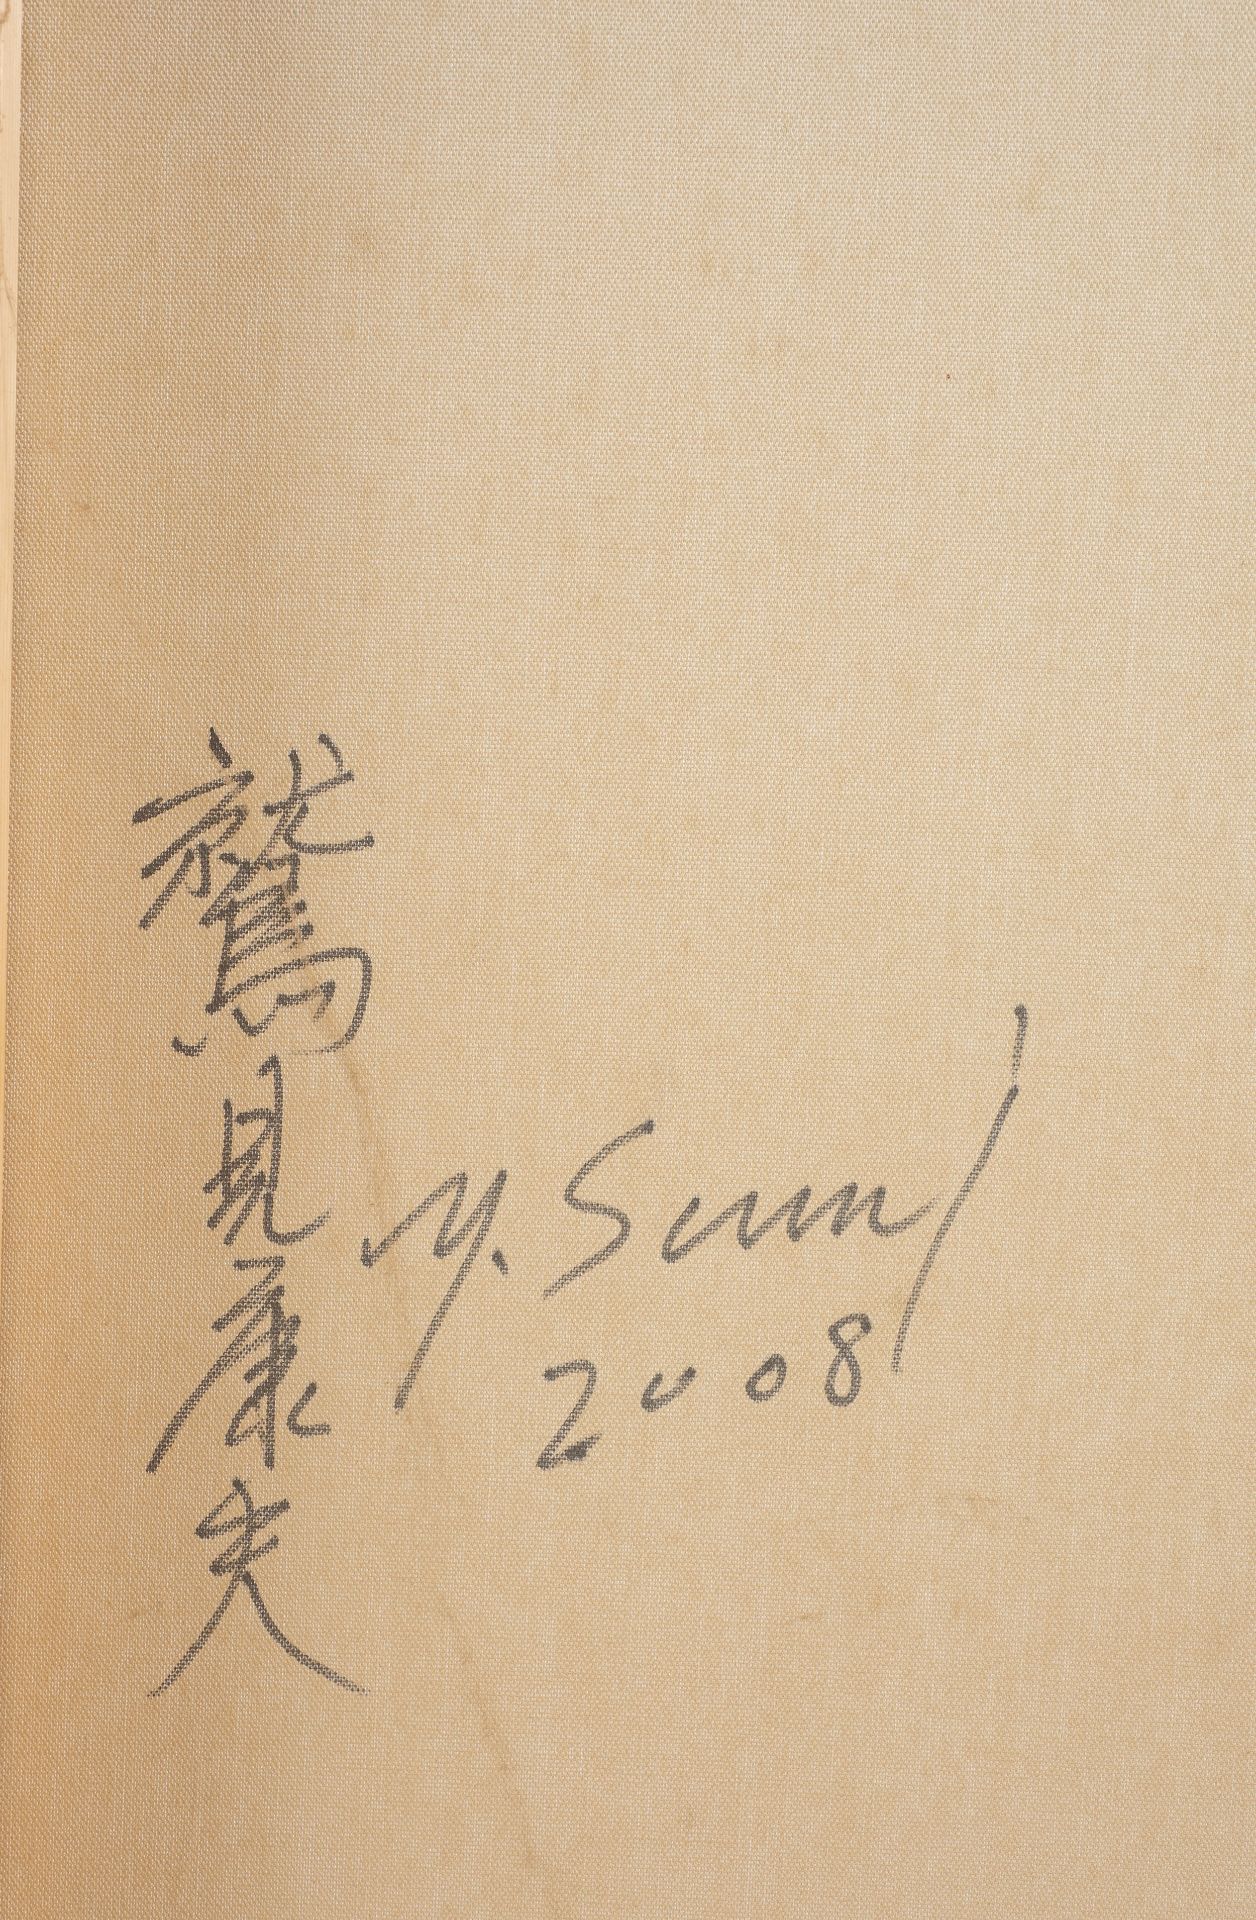 YASUO SUMI - Image 4 of 4